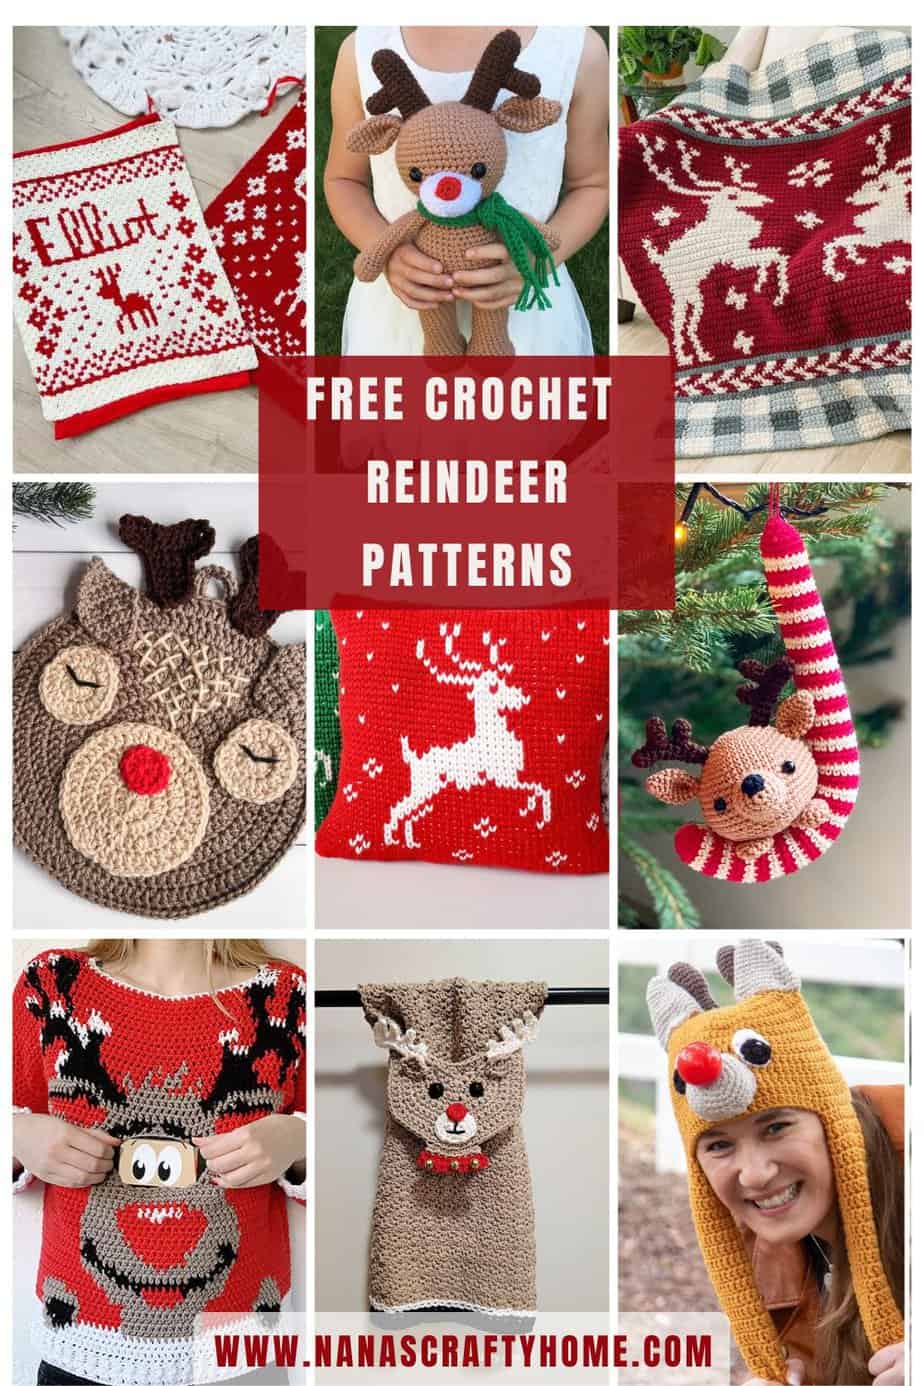 Free crochet reindeer patterns